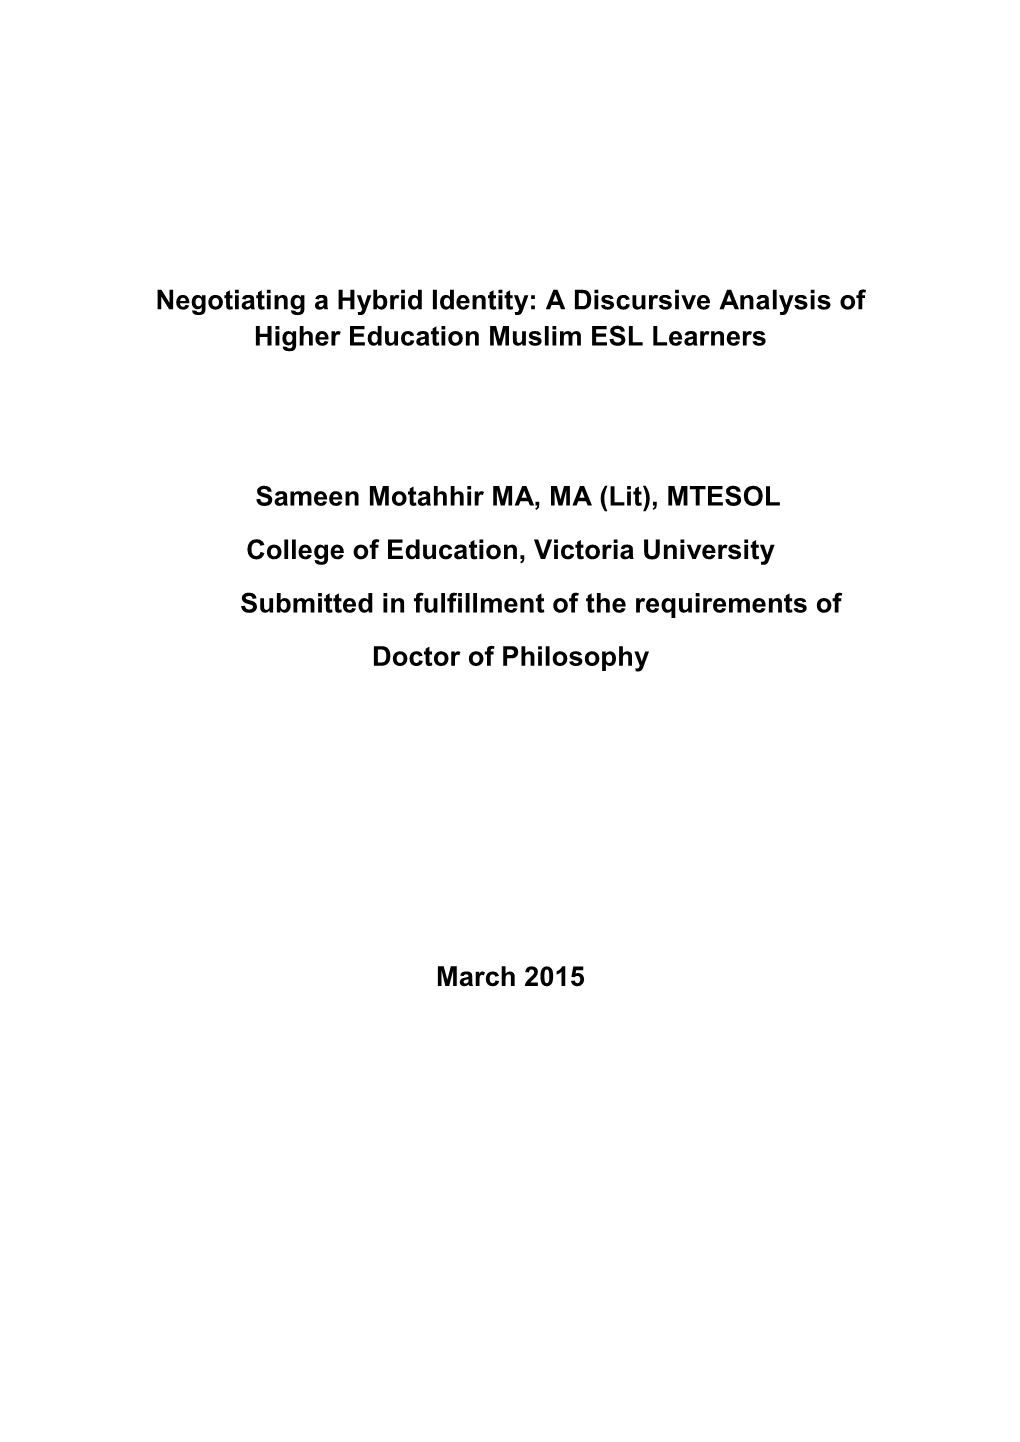 Negotiating a Hybrid Identity: a Discursive Analysis of Higher Education Muslim ESL Learners Sameen Motahhir MA, MA